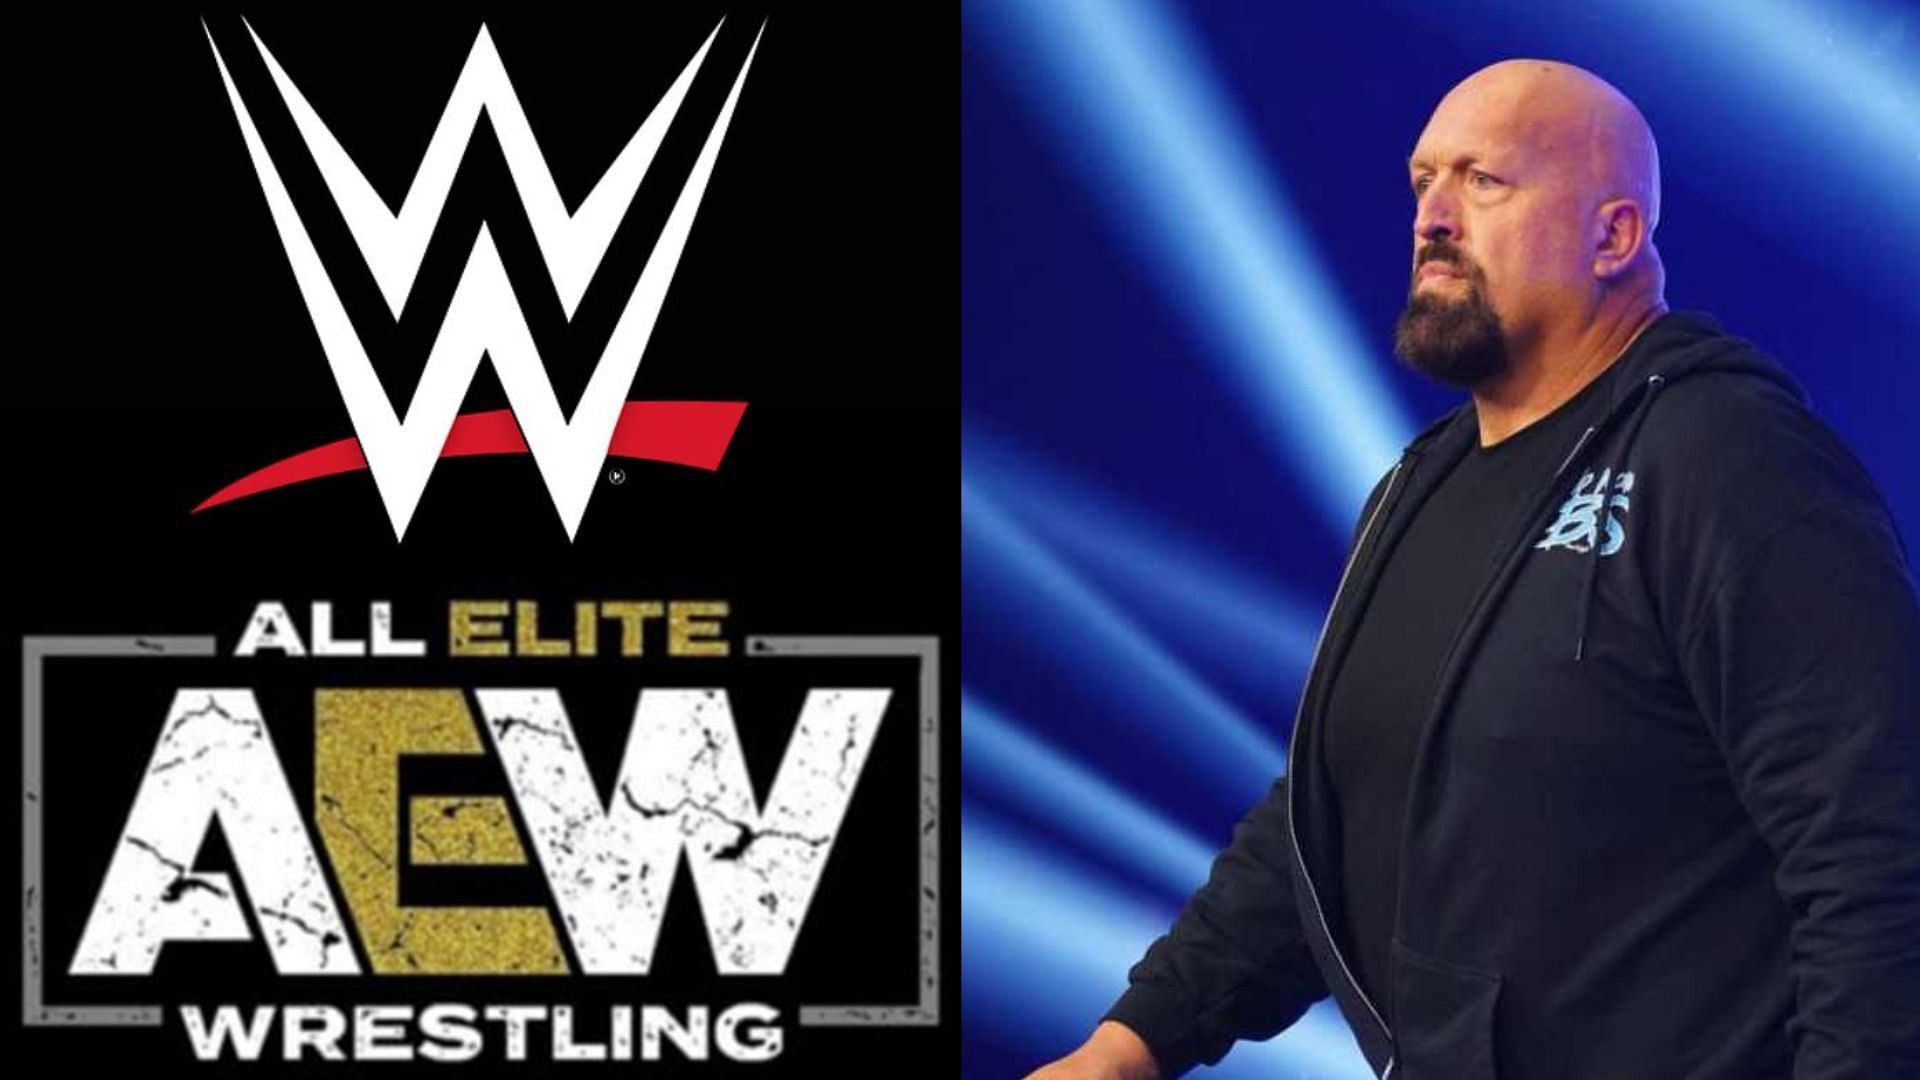 The Big Show is former WWE World Heavyweight Champion